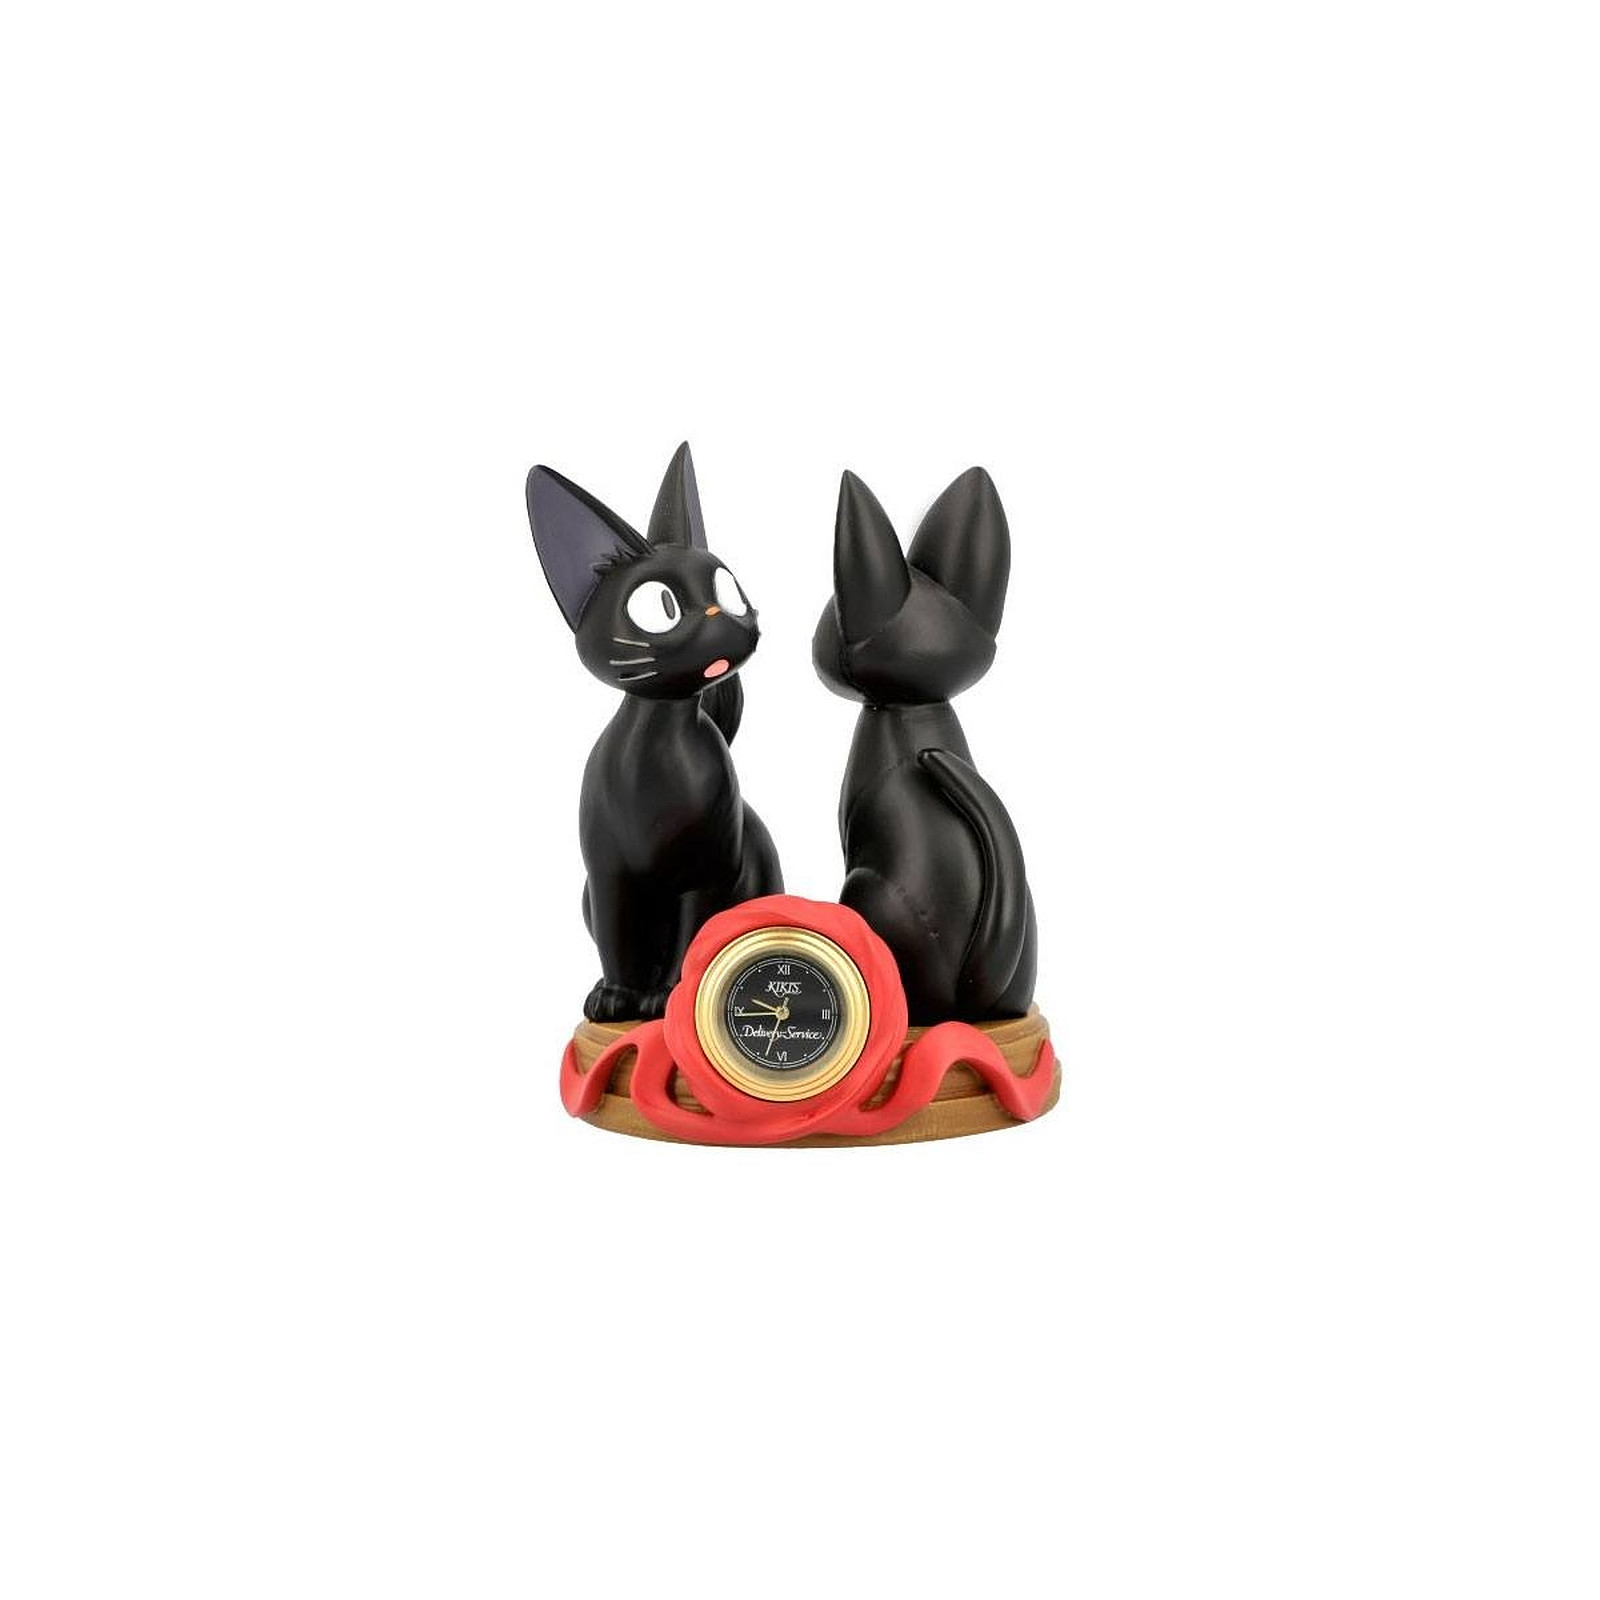 Kiki la petite sorcière - Horloge Jiji & Soft Toy Jiji 11 cm - Figurines Benelic